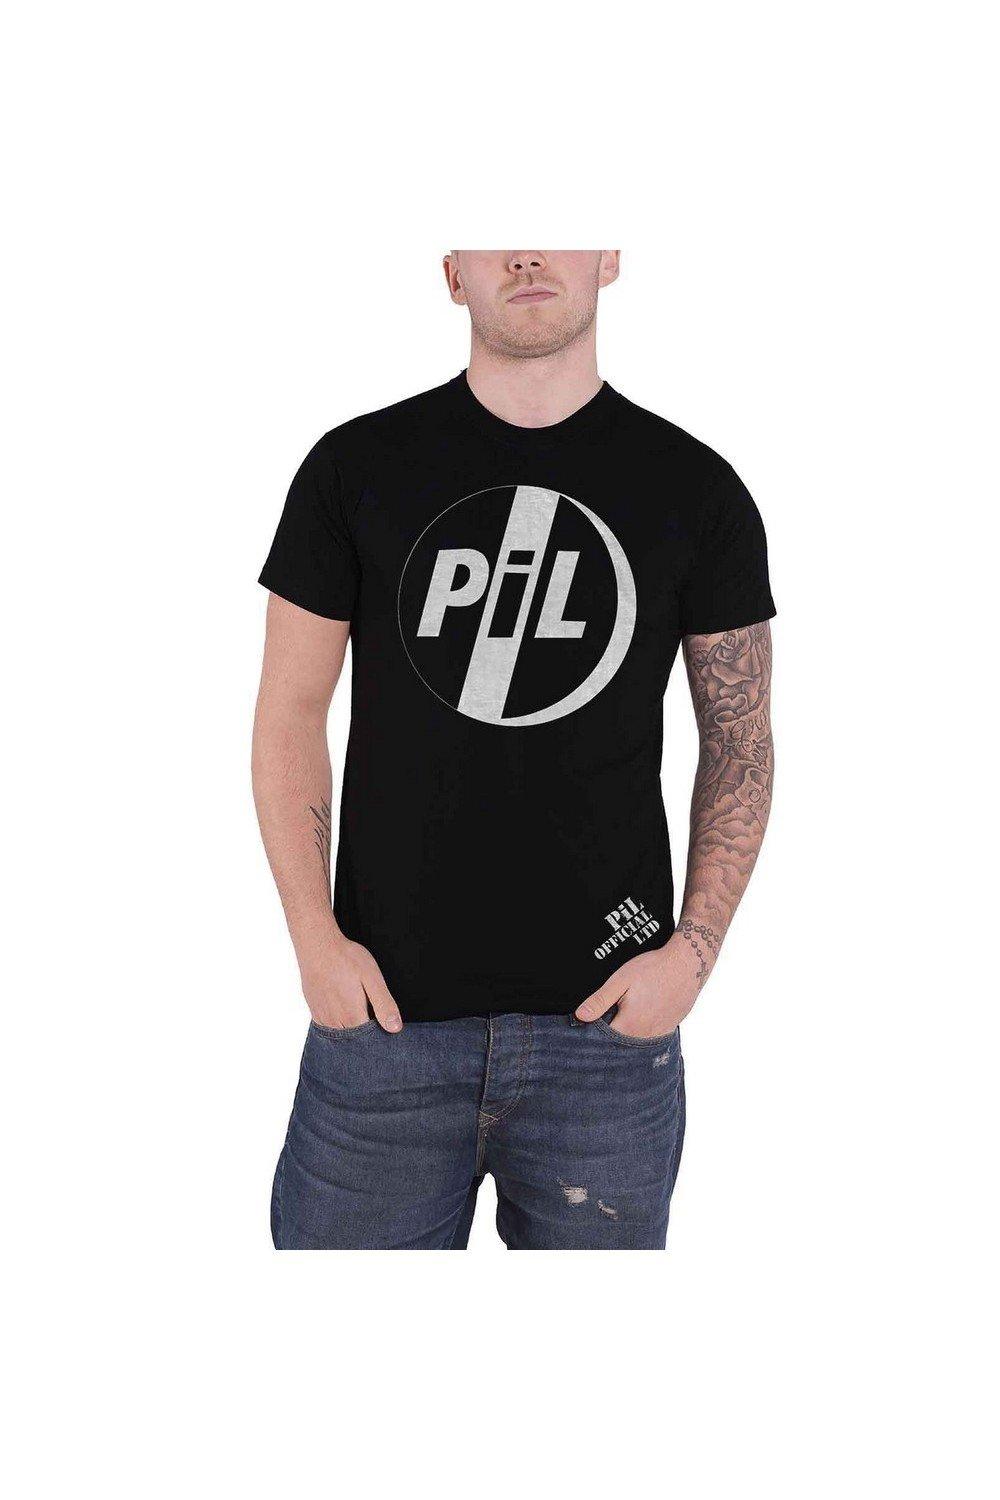 Футболка с логотипом Public Image Ltd, черный футболка с логотипом public lands для взрослых